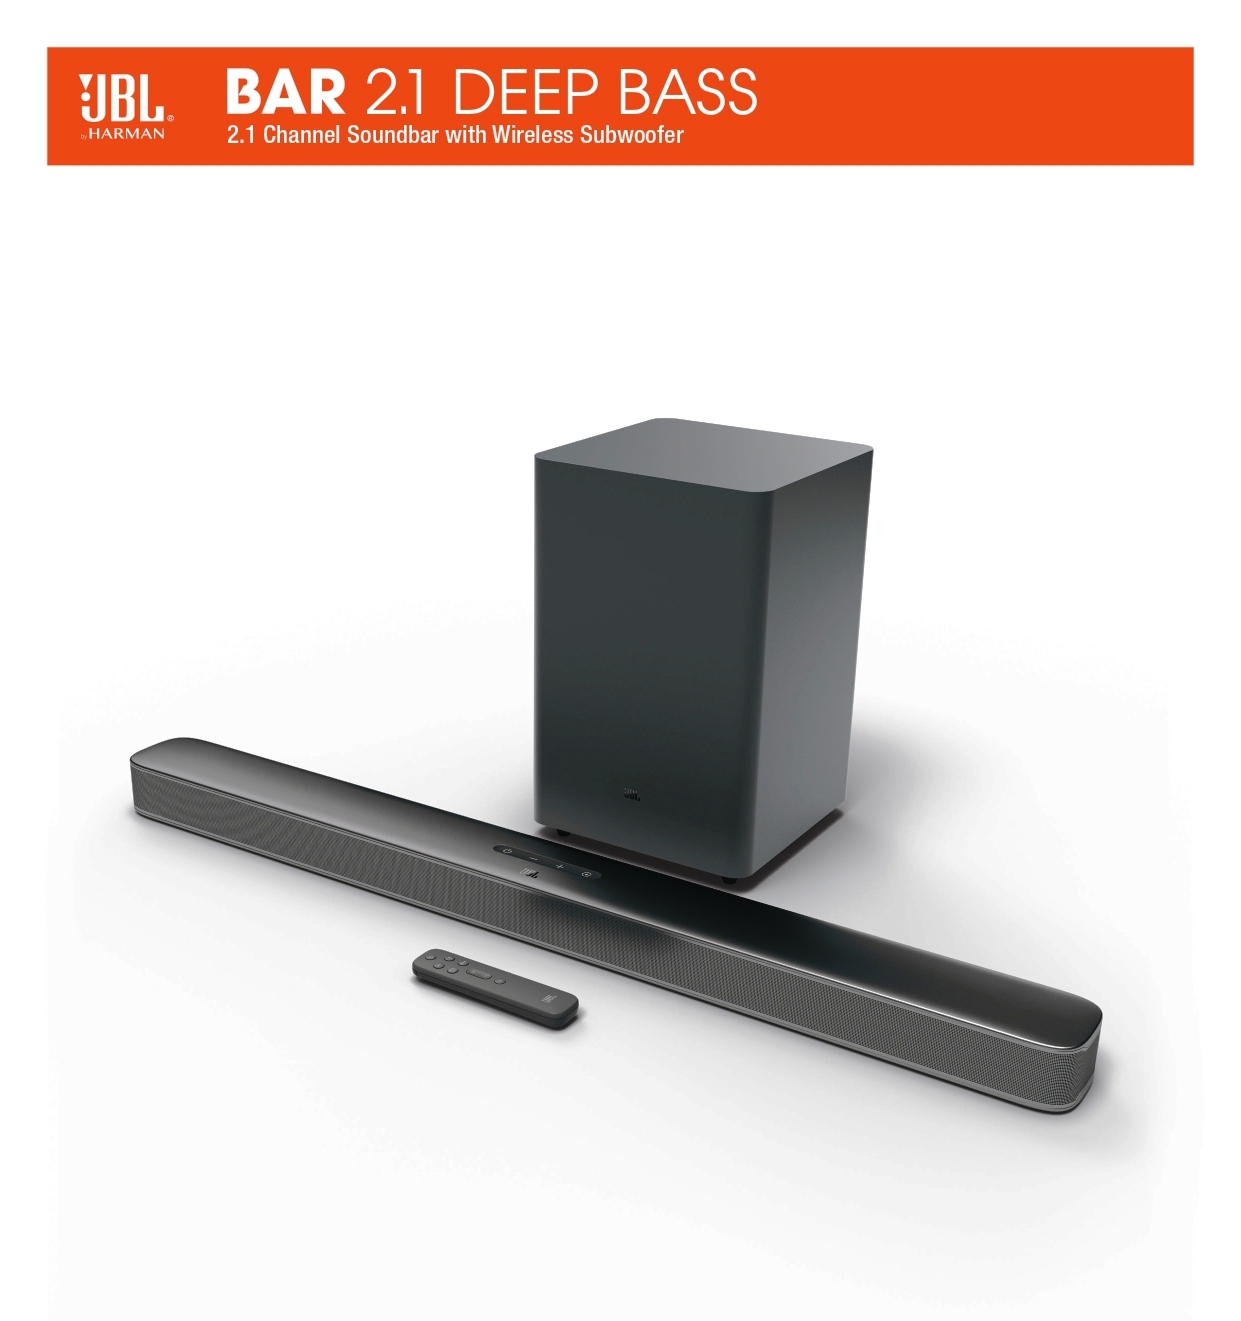 Jbl deep bass купить. Саундбар JBL Bar 2.1. Саундбар JBL Bar 2.1 Deep Bass черный. Саундбар JBL Bar 2.1 черный. JBL Deep 2.1 саундбар.